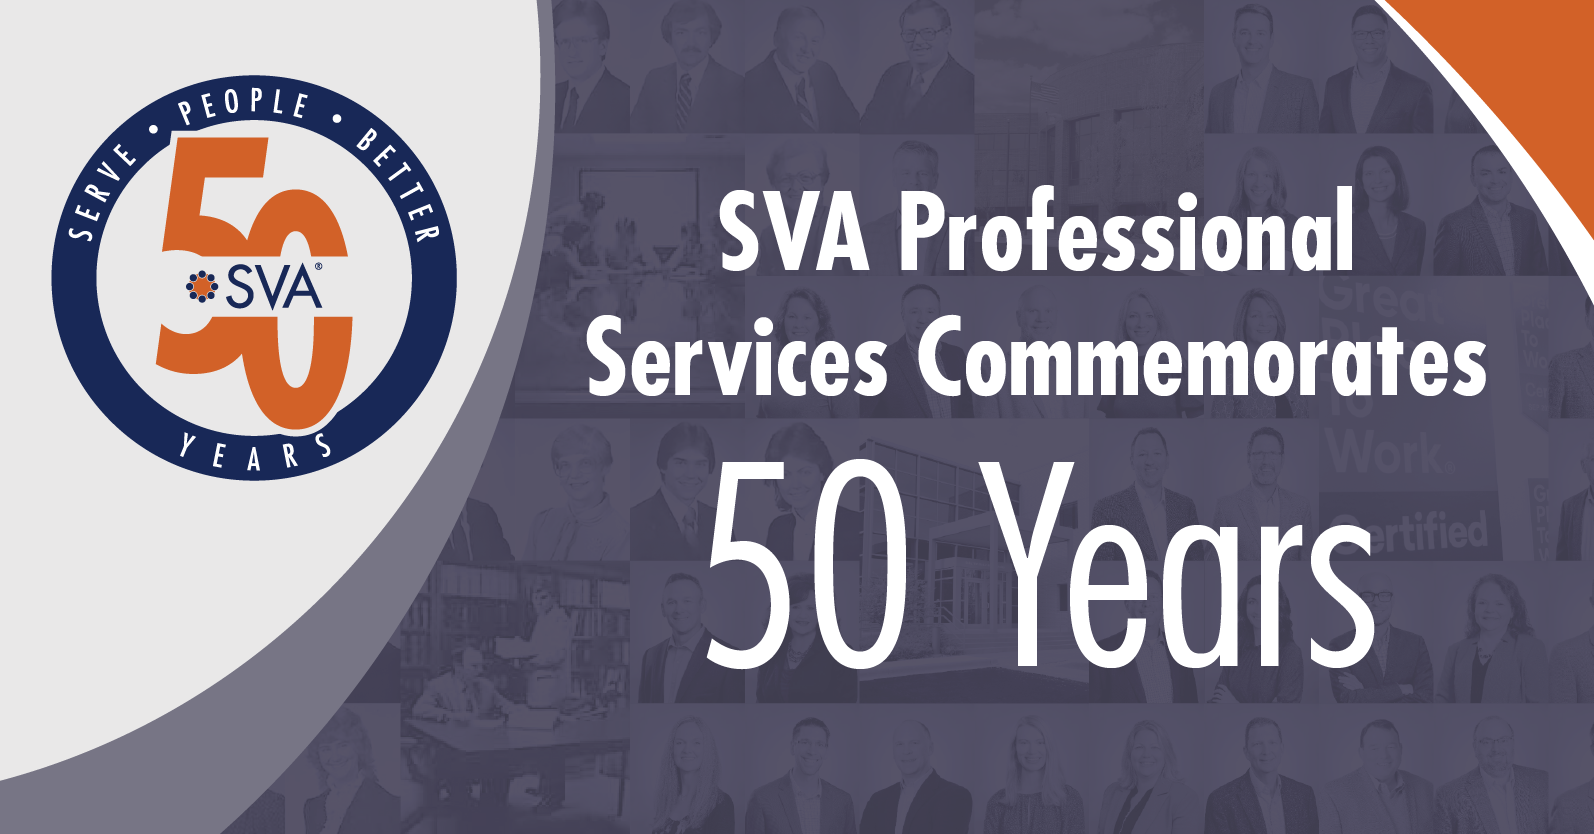 SVA Professional Services Commemorates 50 Years